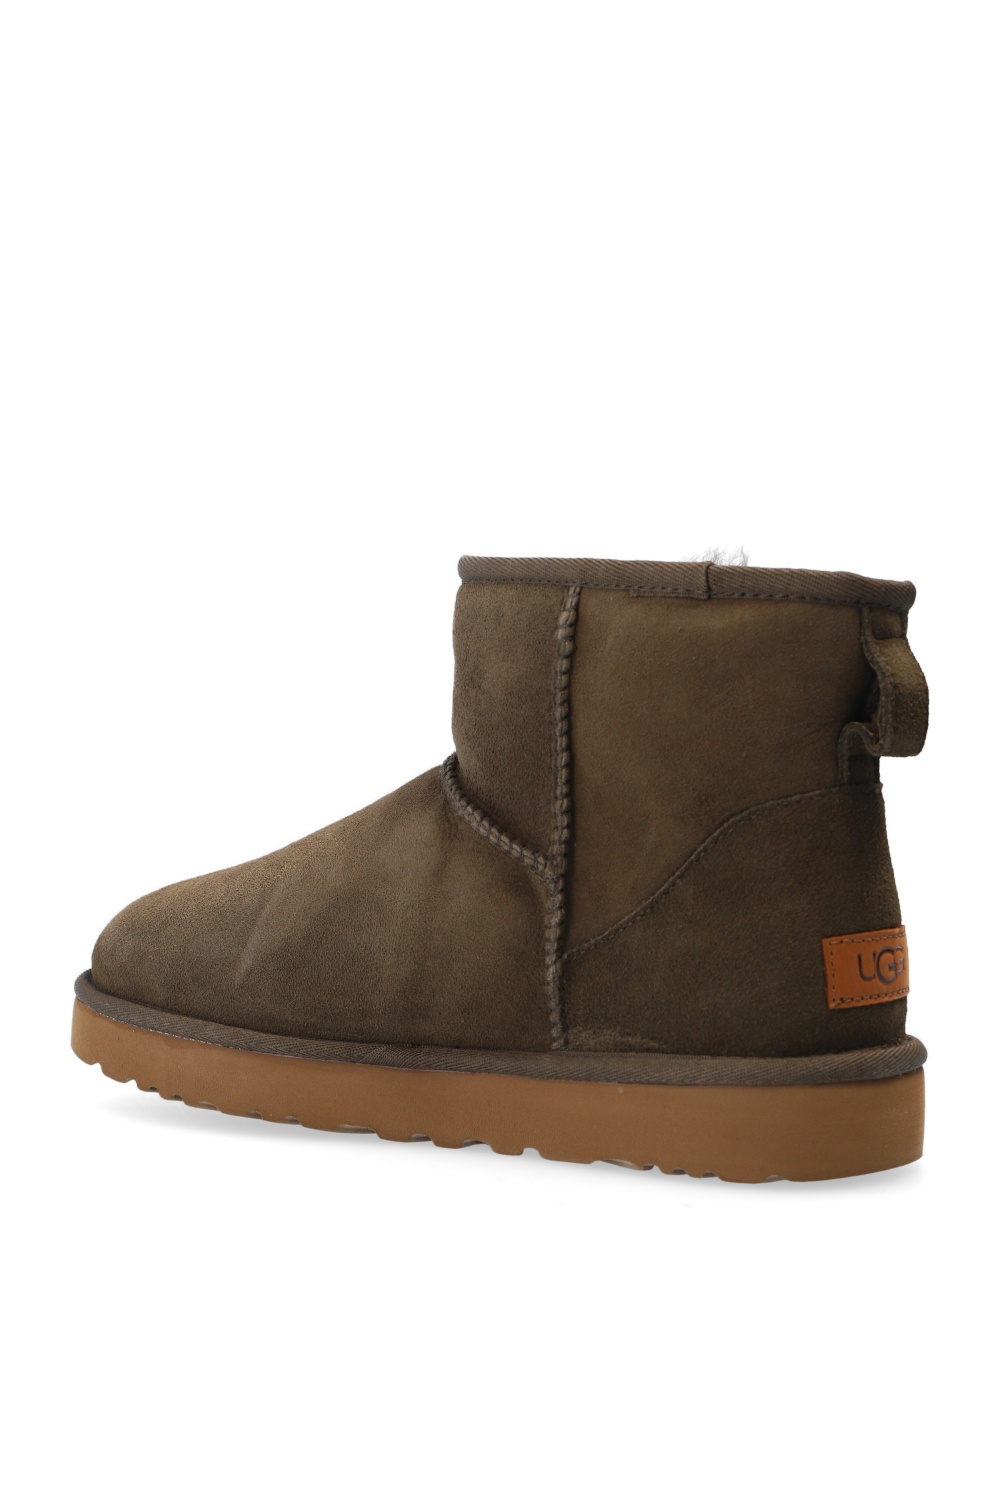 UGG ‘W Classic Mini II’ snow boots